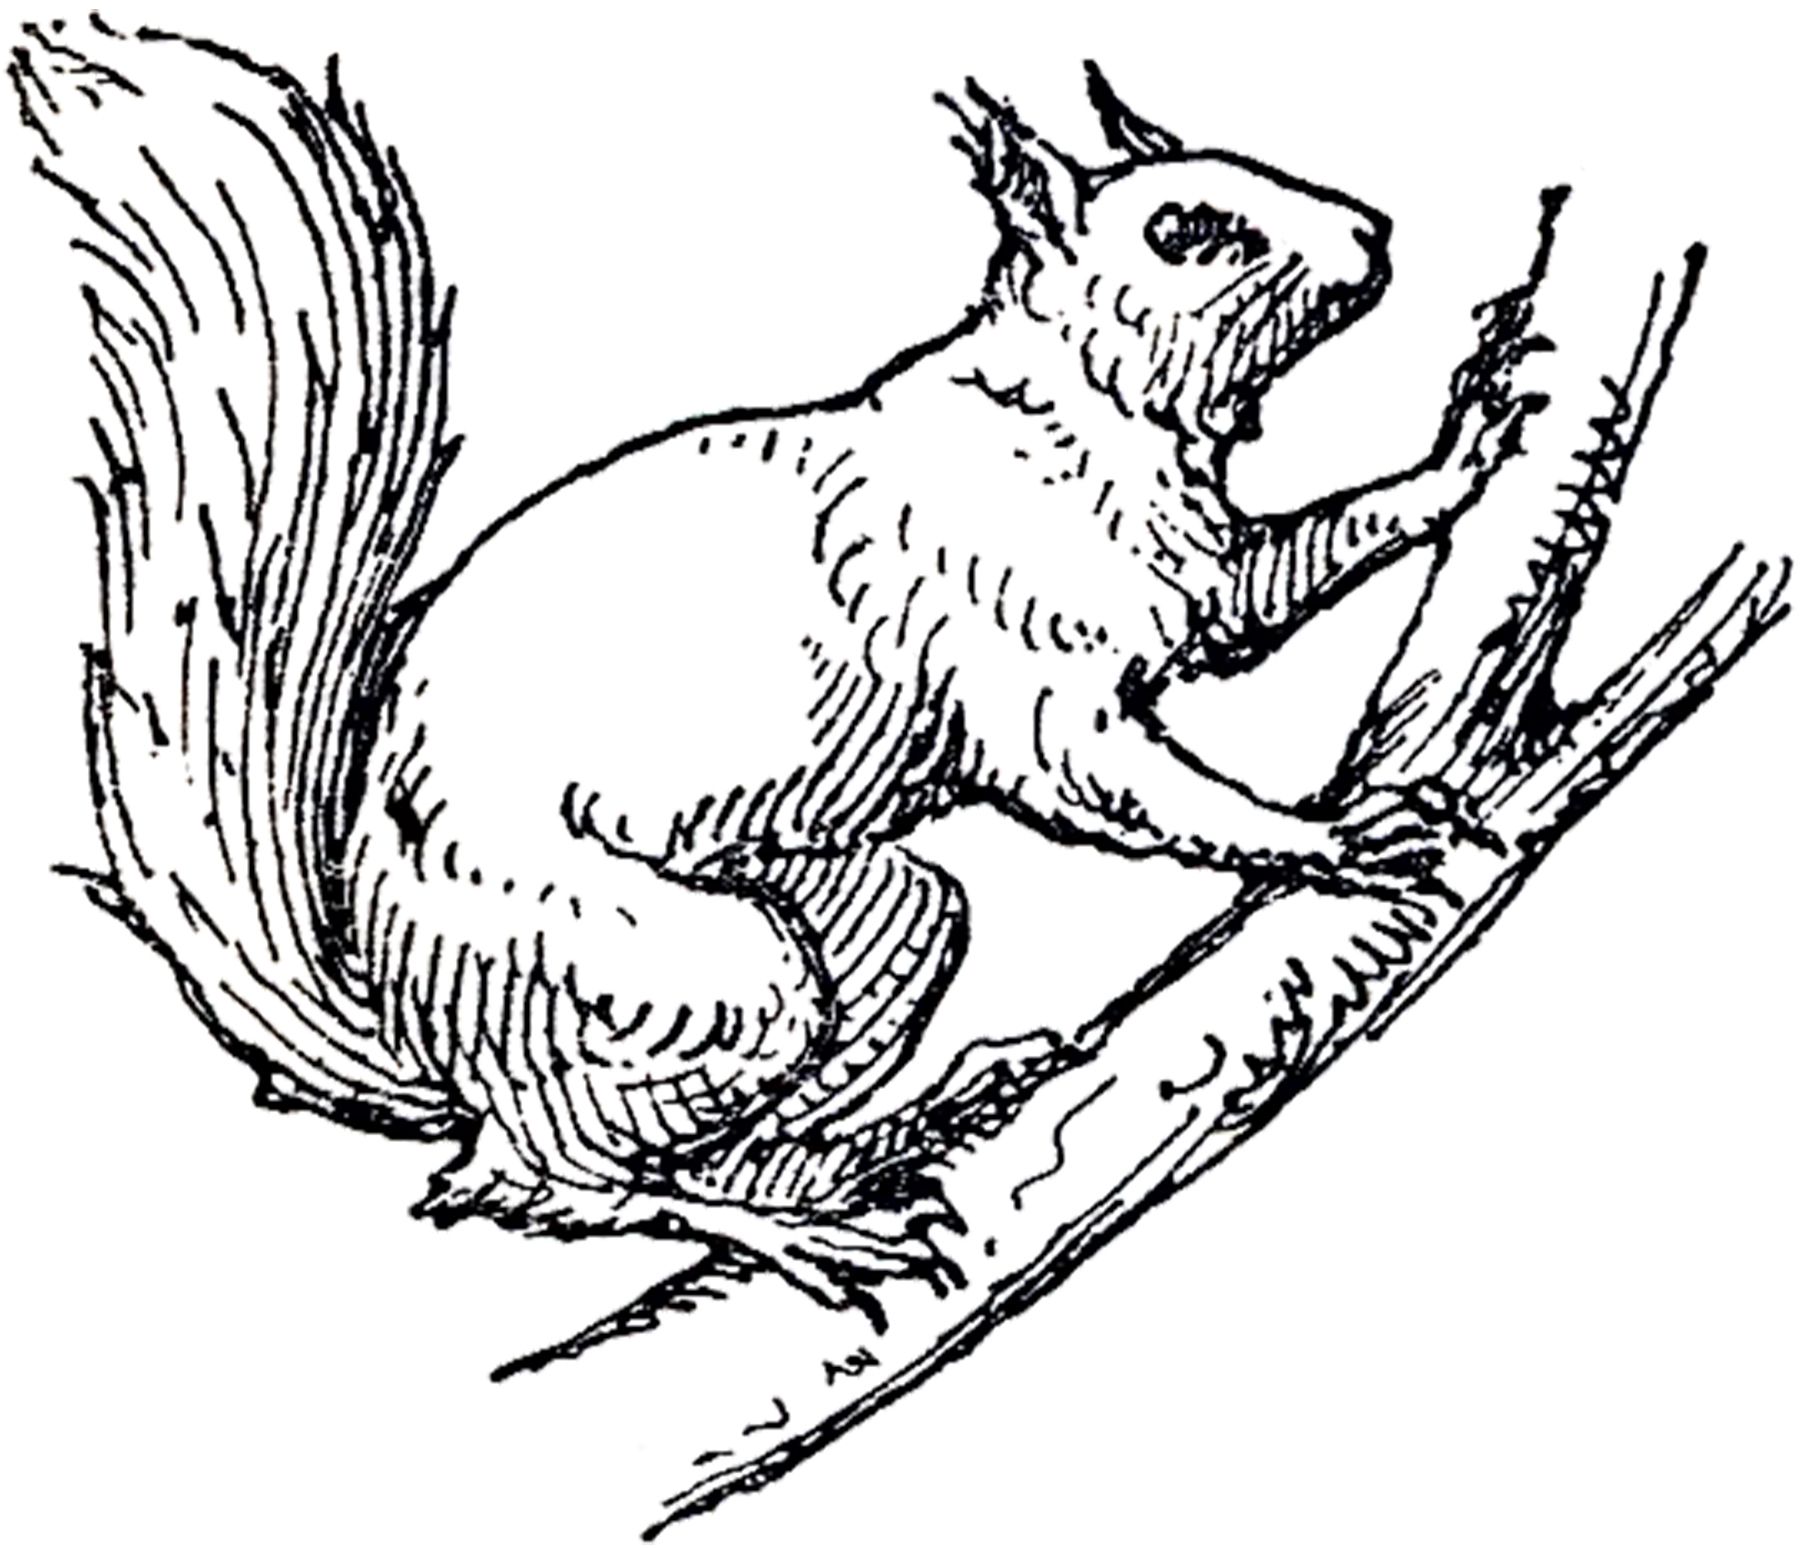 Vintage Squirrel Illustration | Squirrel illustration, Squirrel and ...